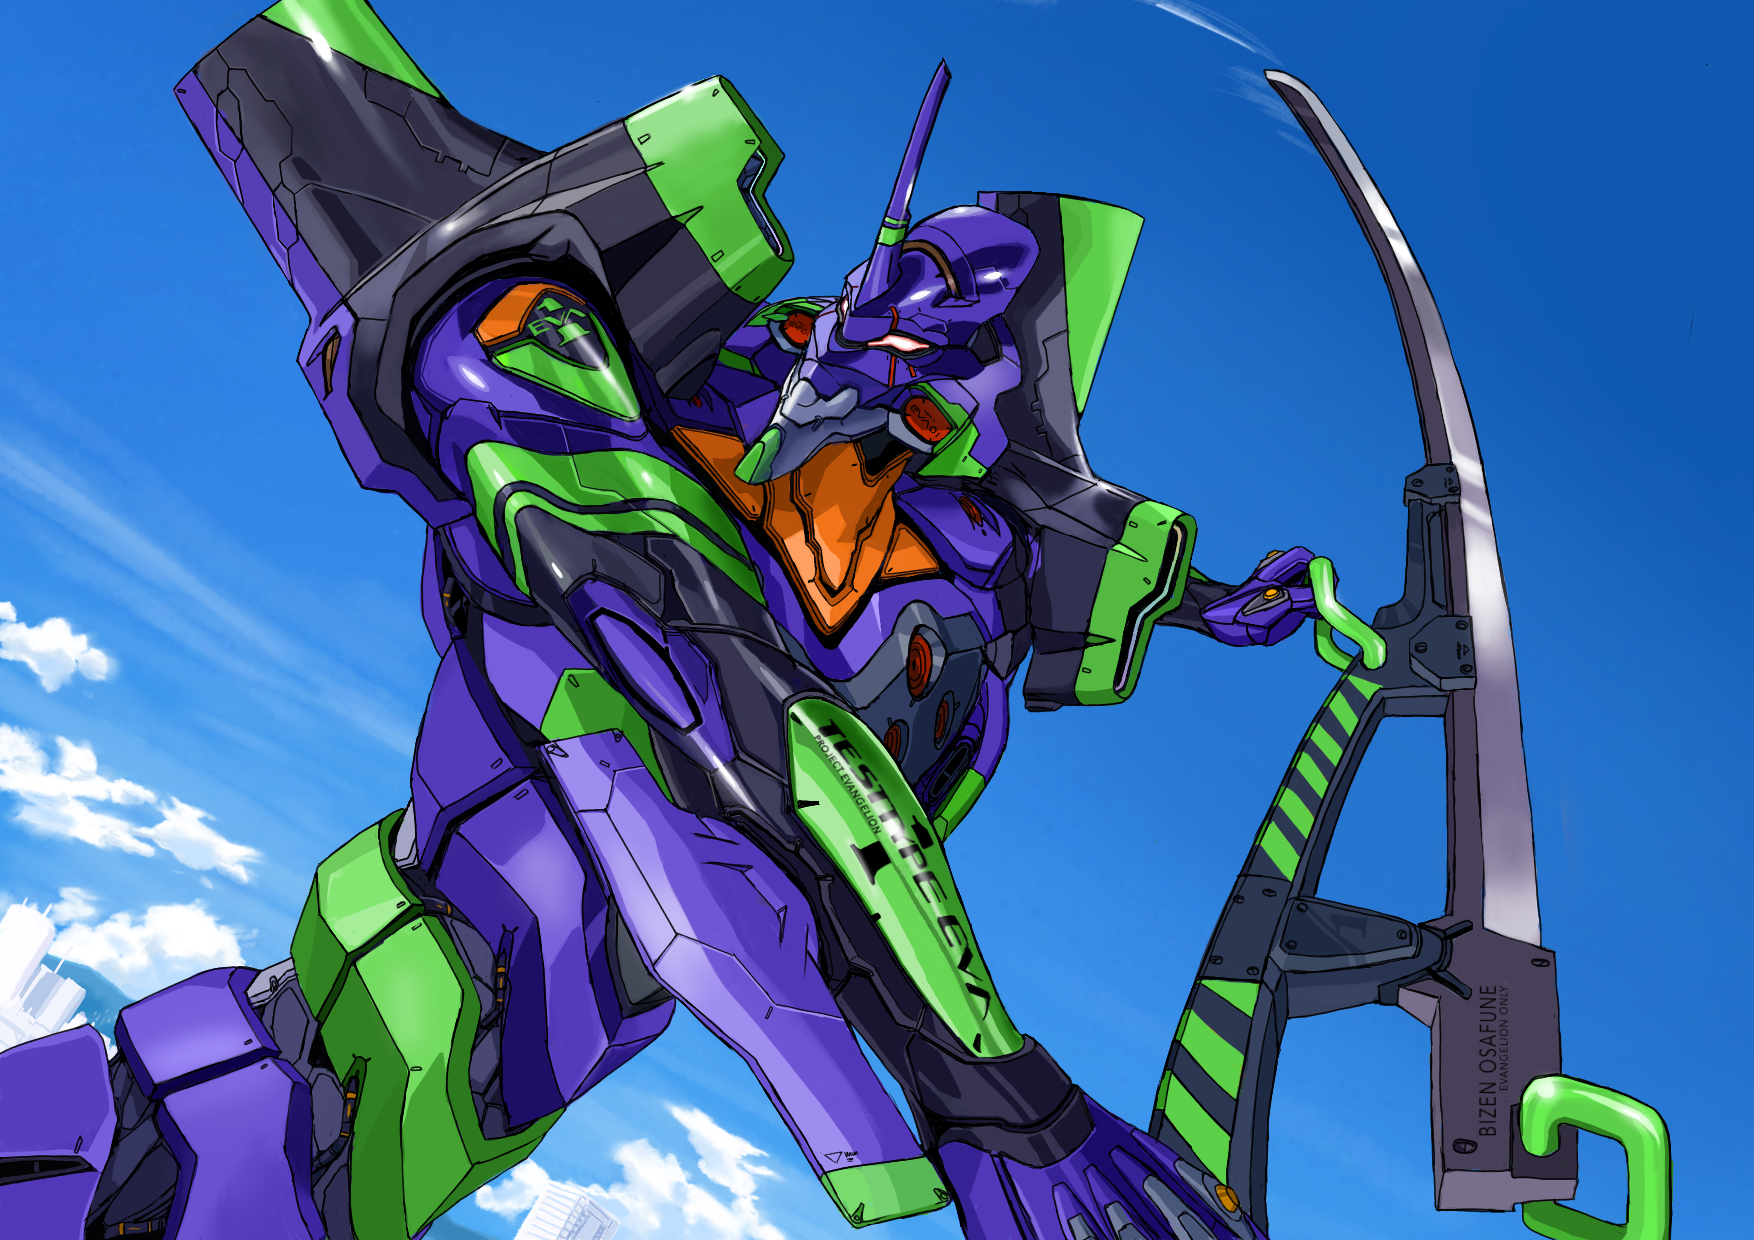 EVA Unit 01 Neon Genesis Evangelion Anime Mechs Super Robot Taisen Artwork Digital Art Fan Art 1754x1240